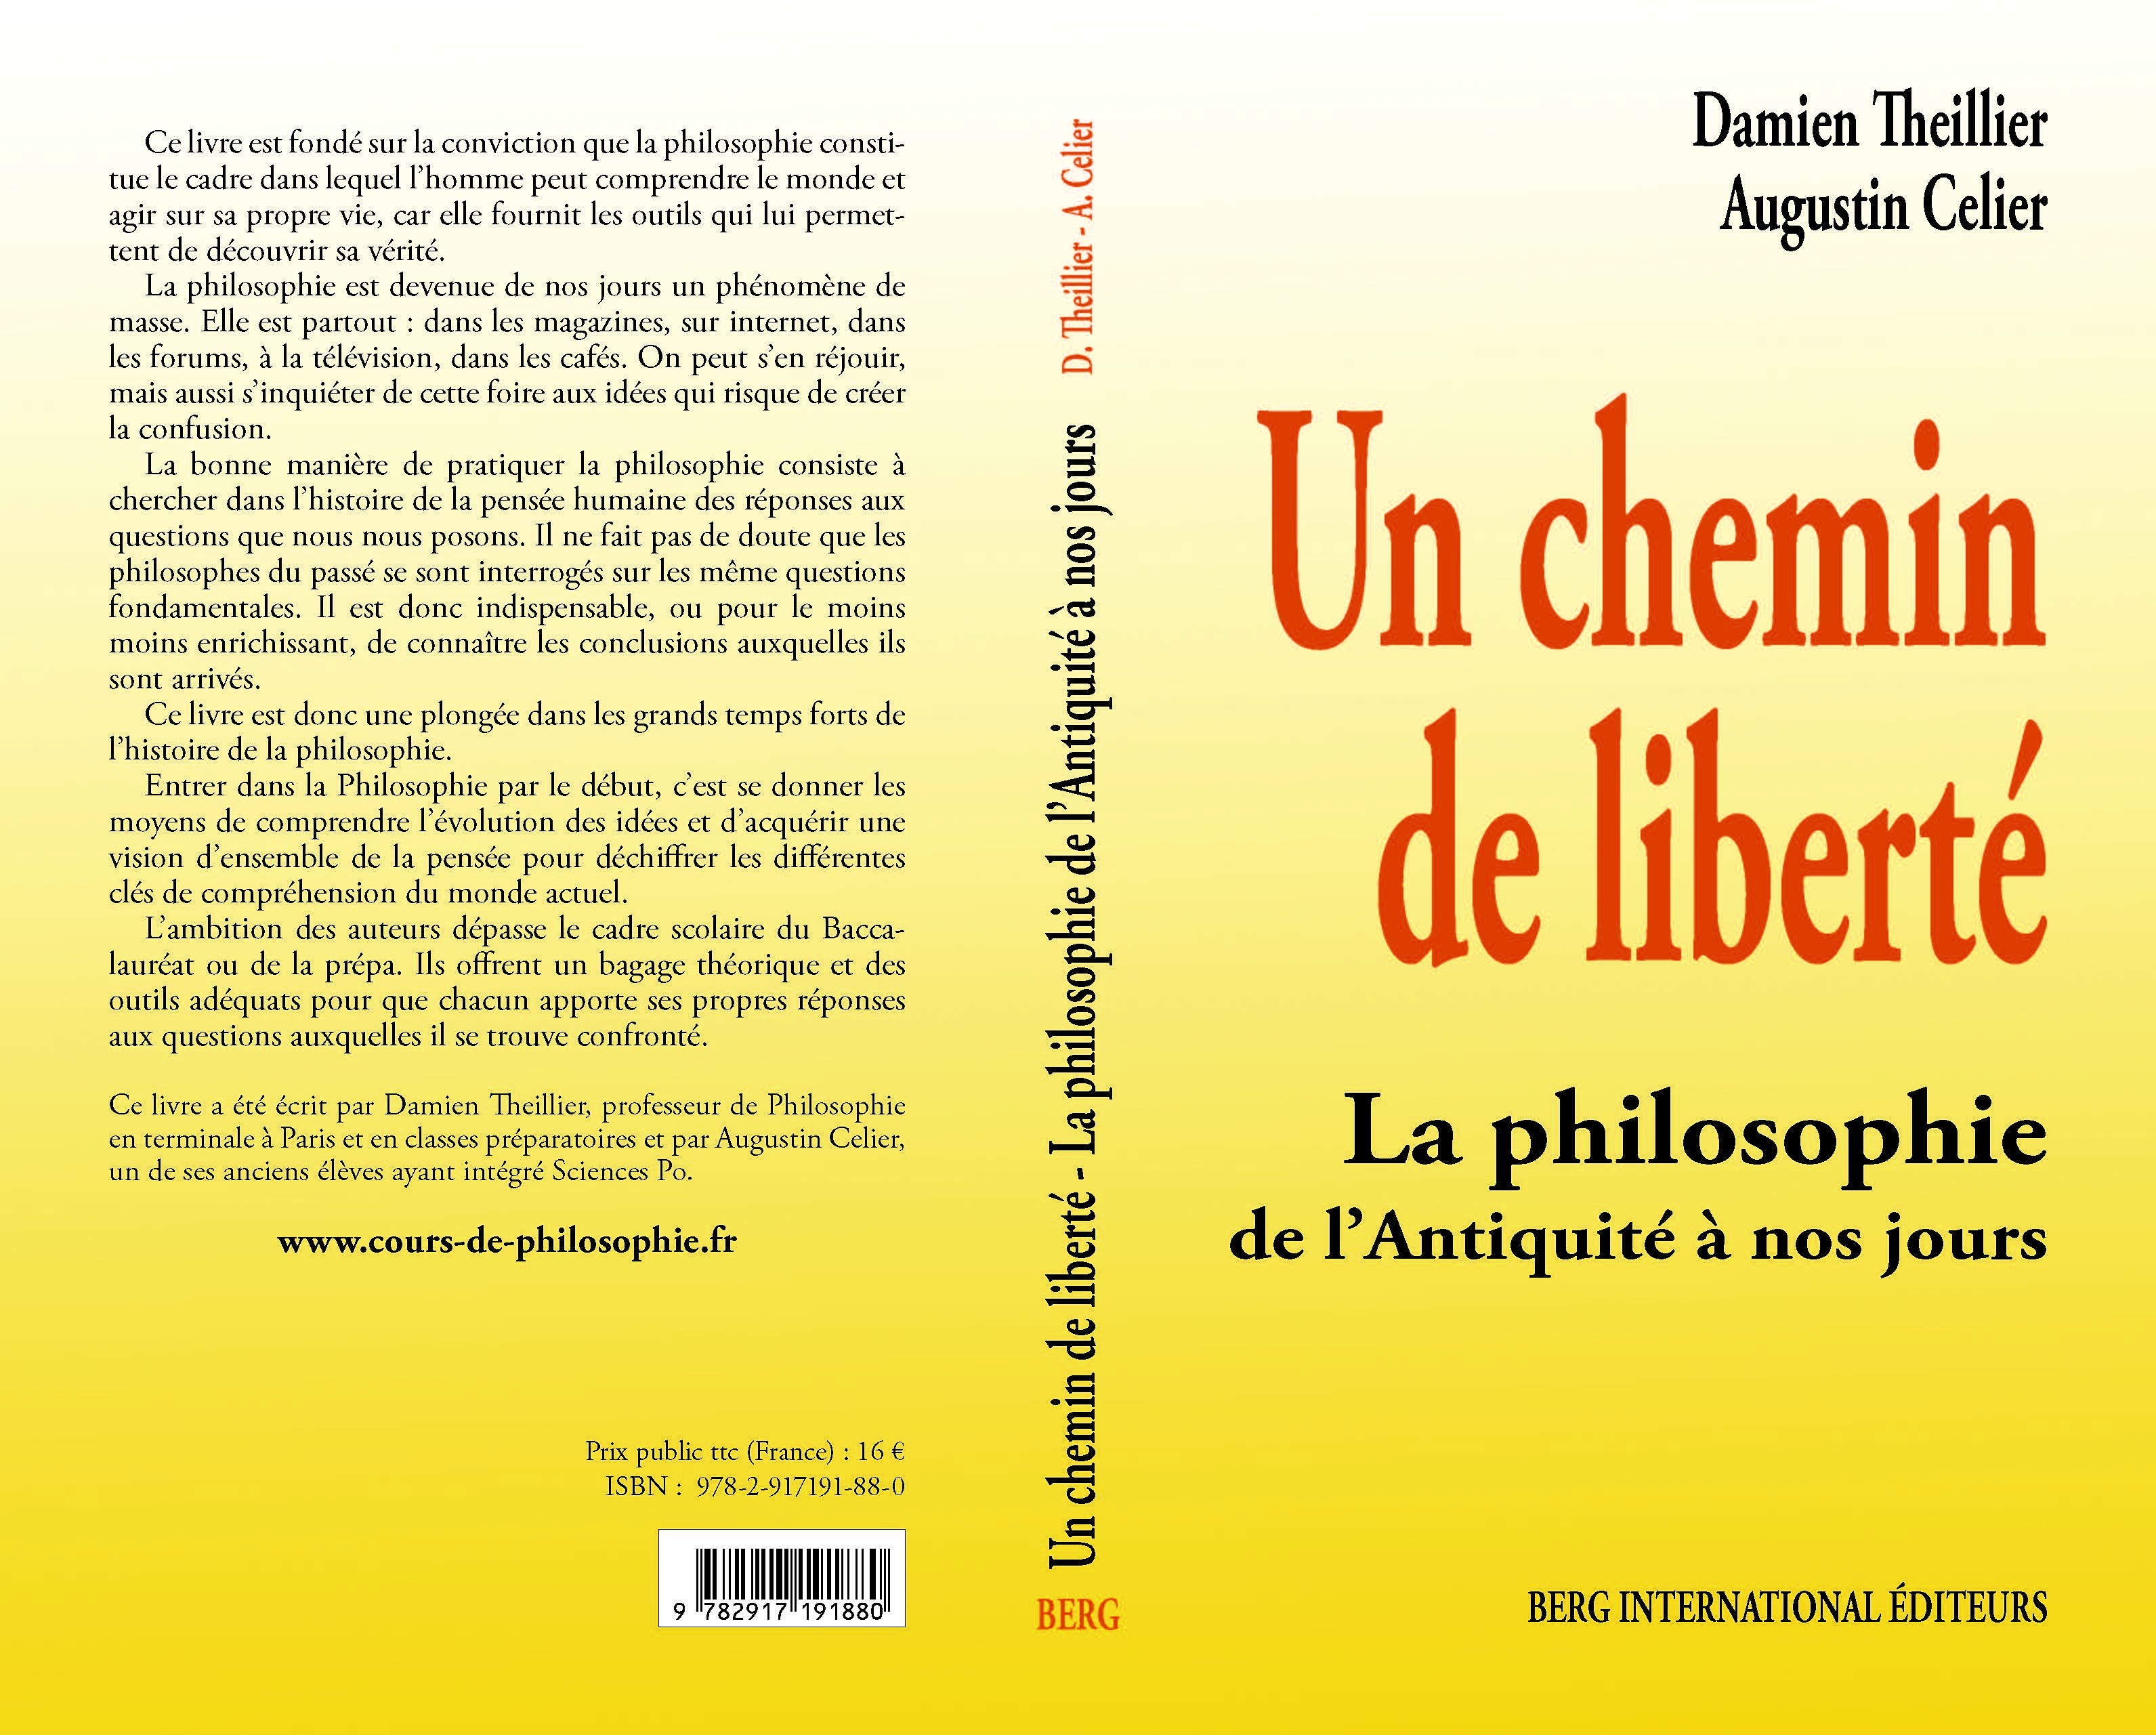 Dissertation gratuite philosophie libert